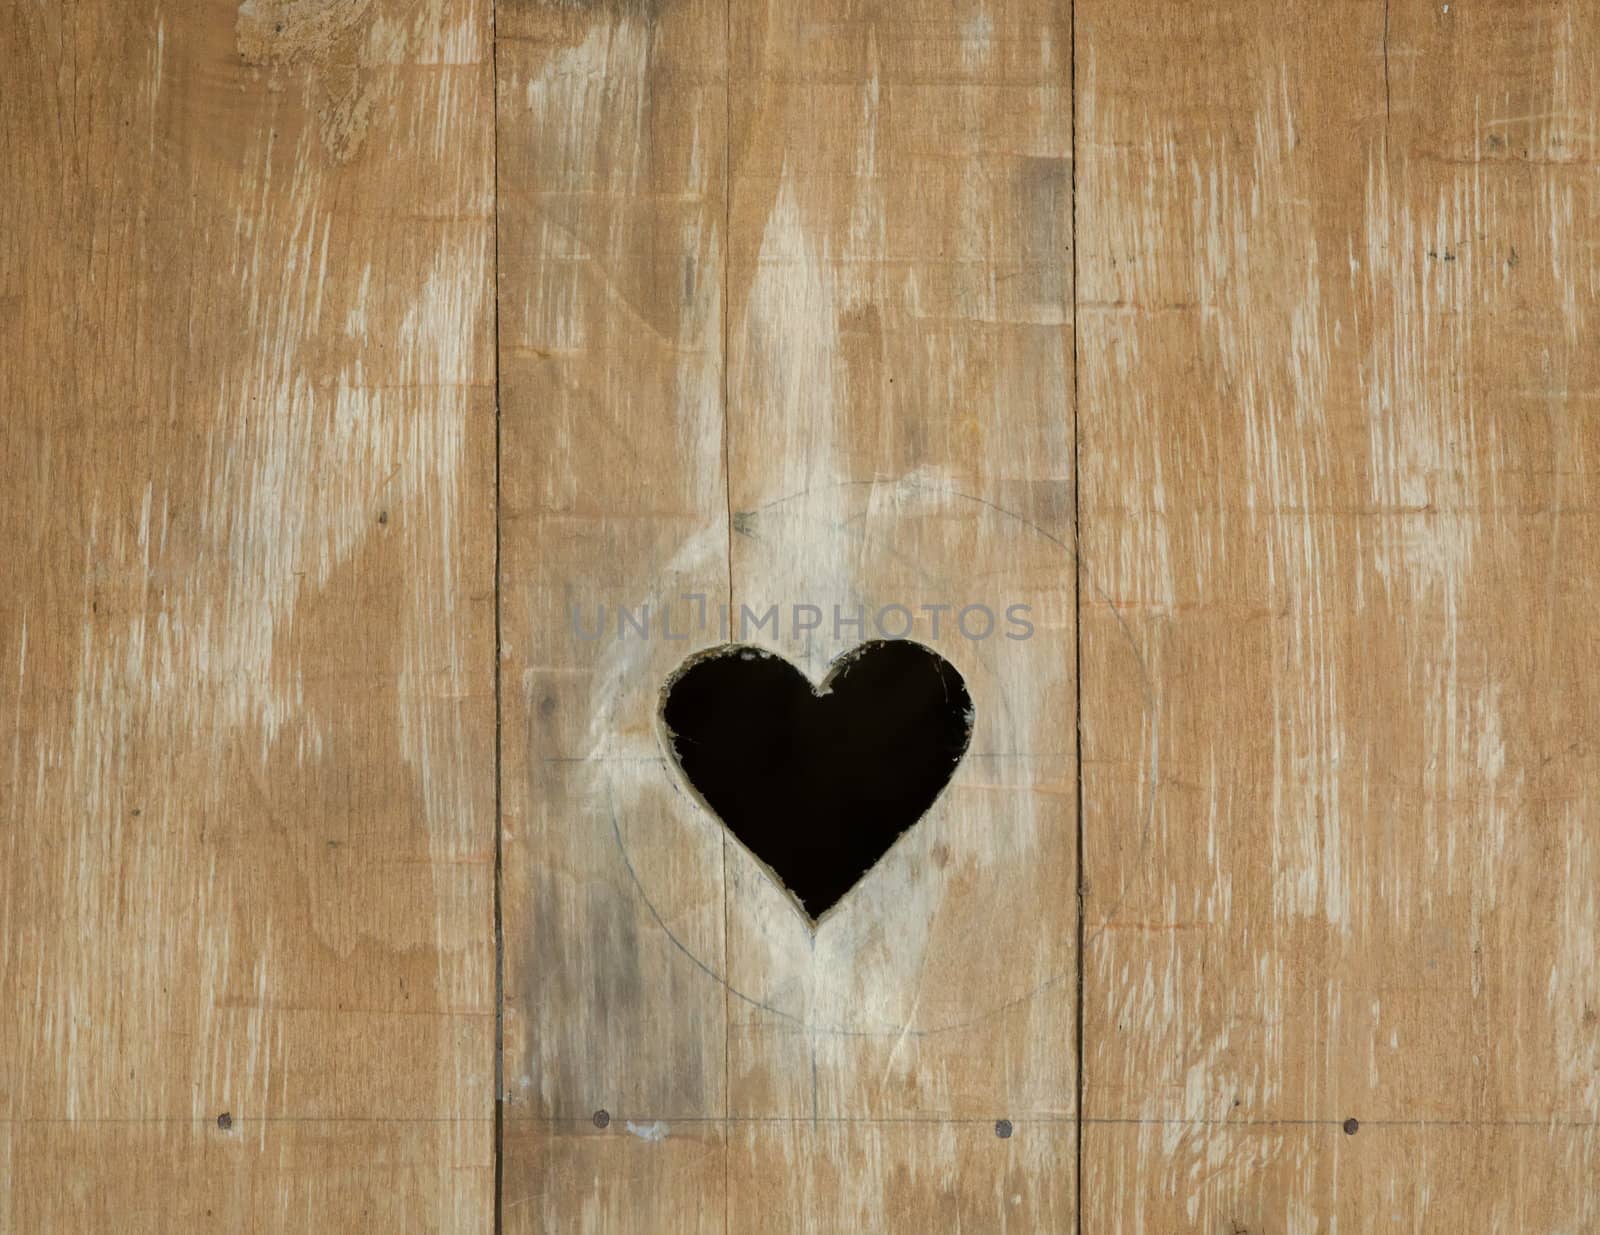 heart carved in wood by njaj